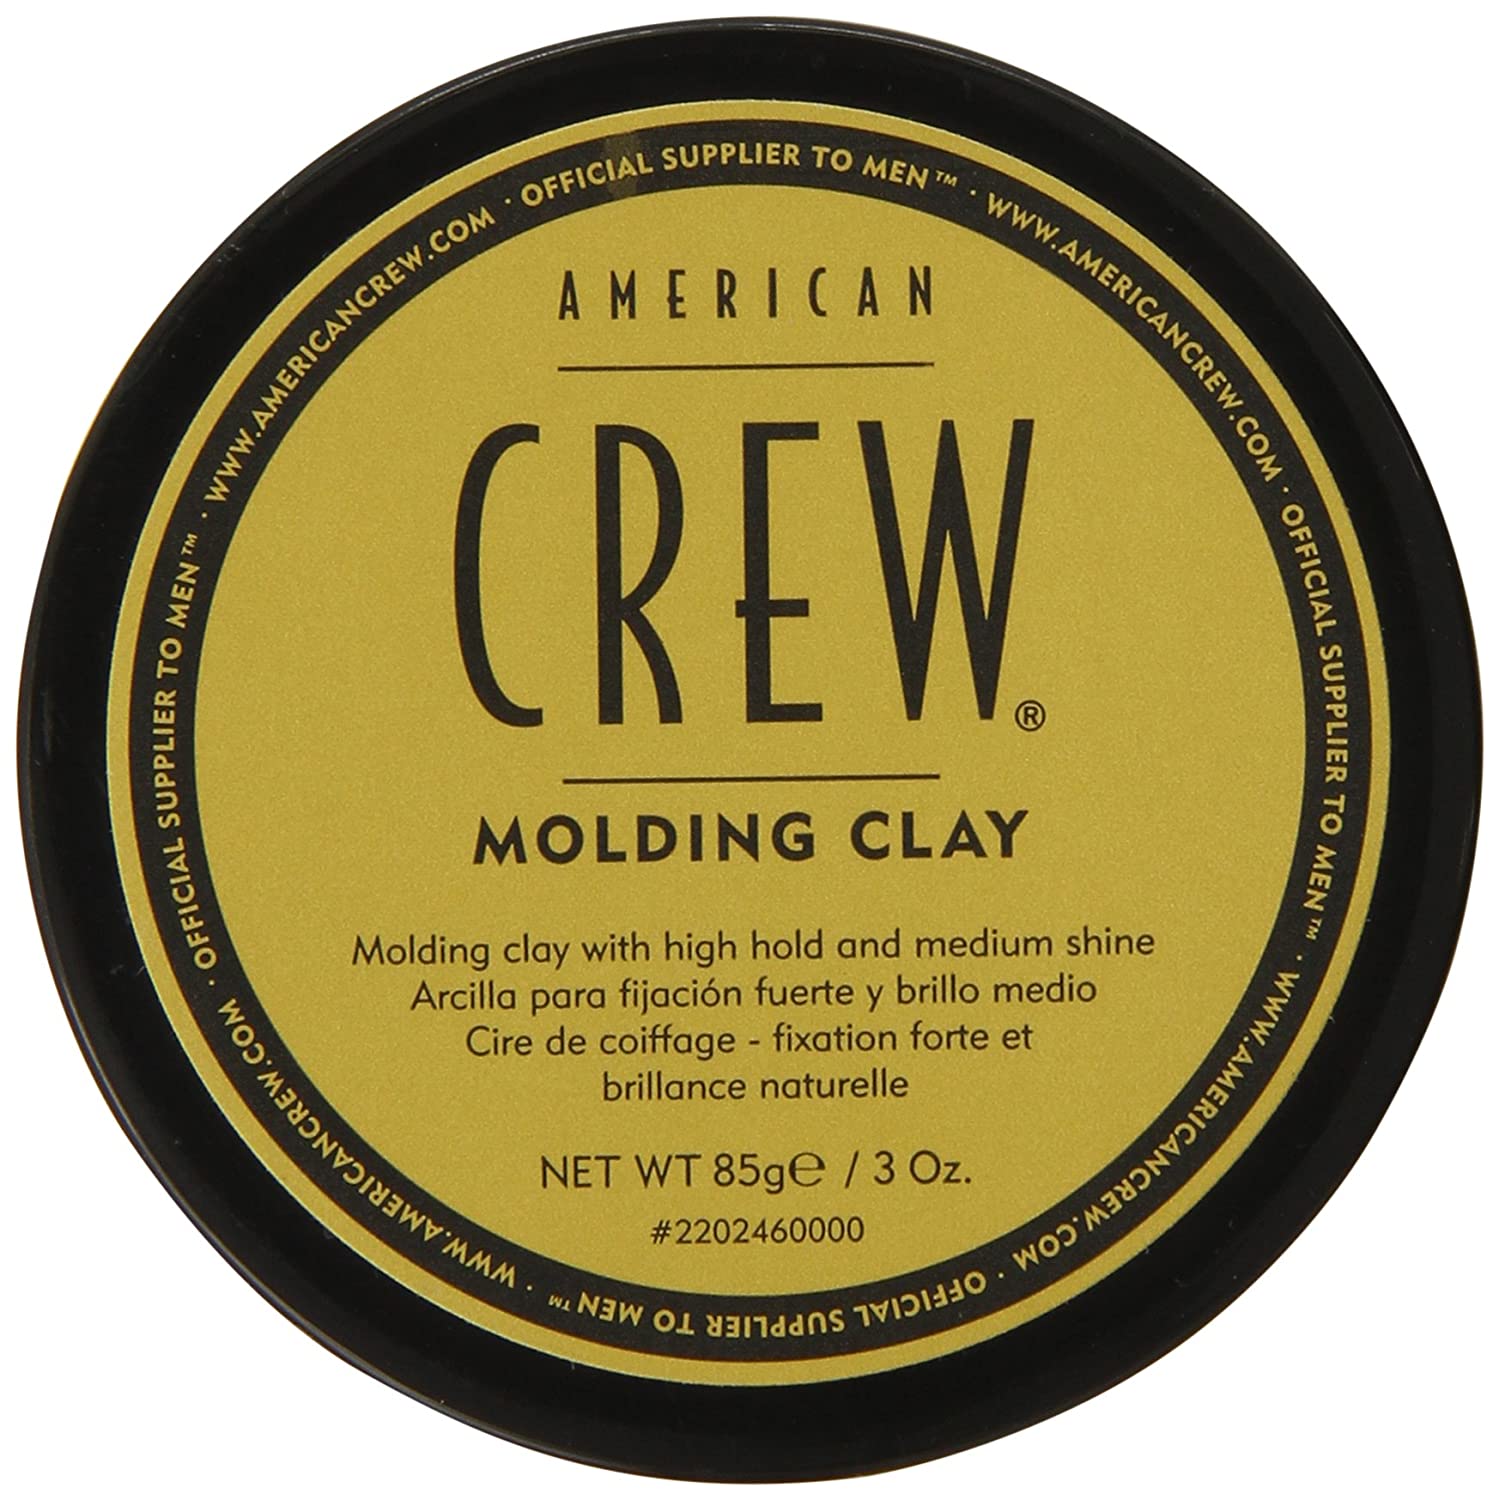 AMERICAN CREW - Modelling clay 85 ml